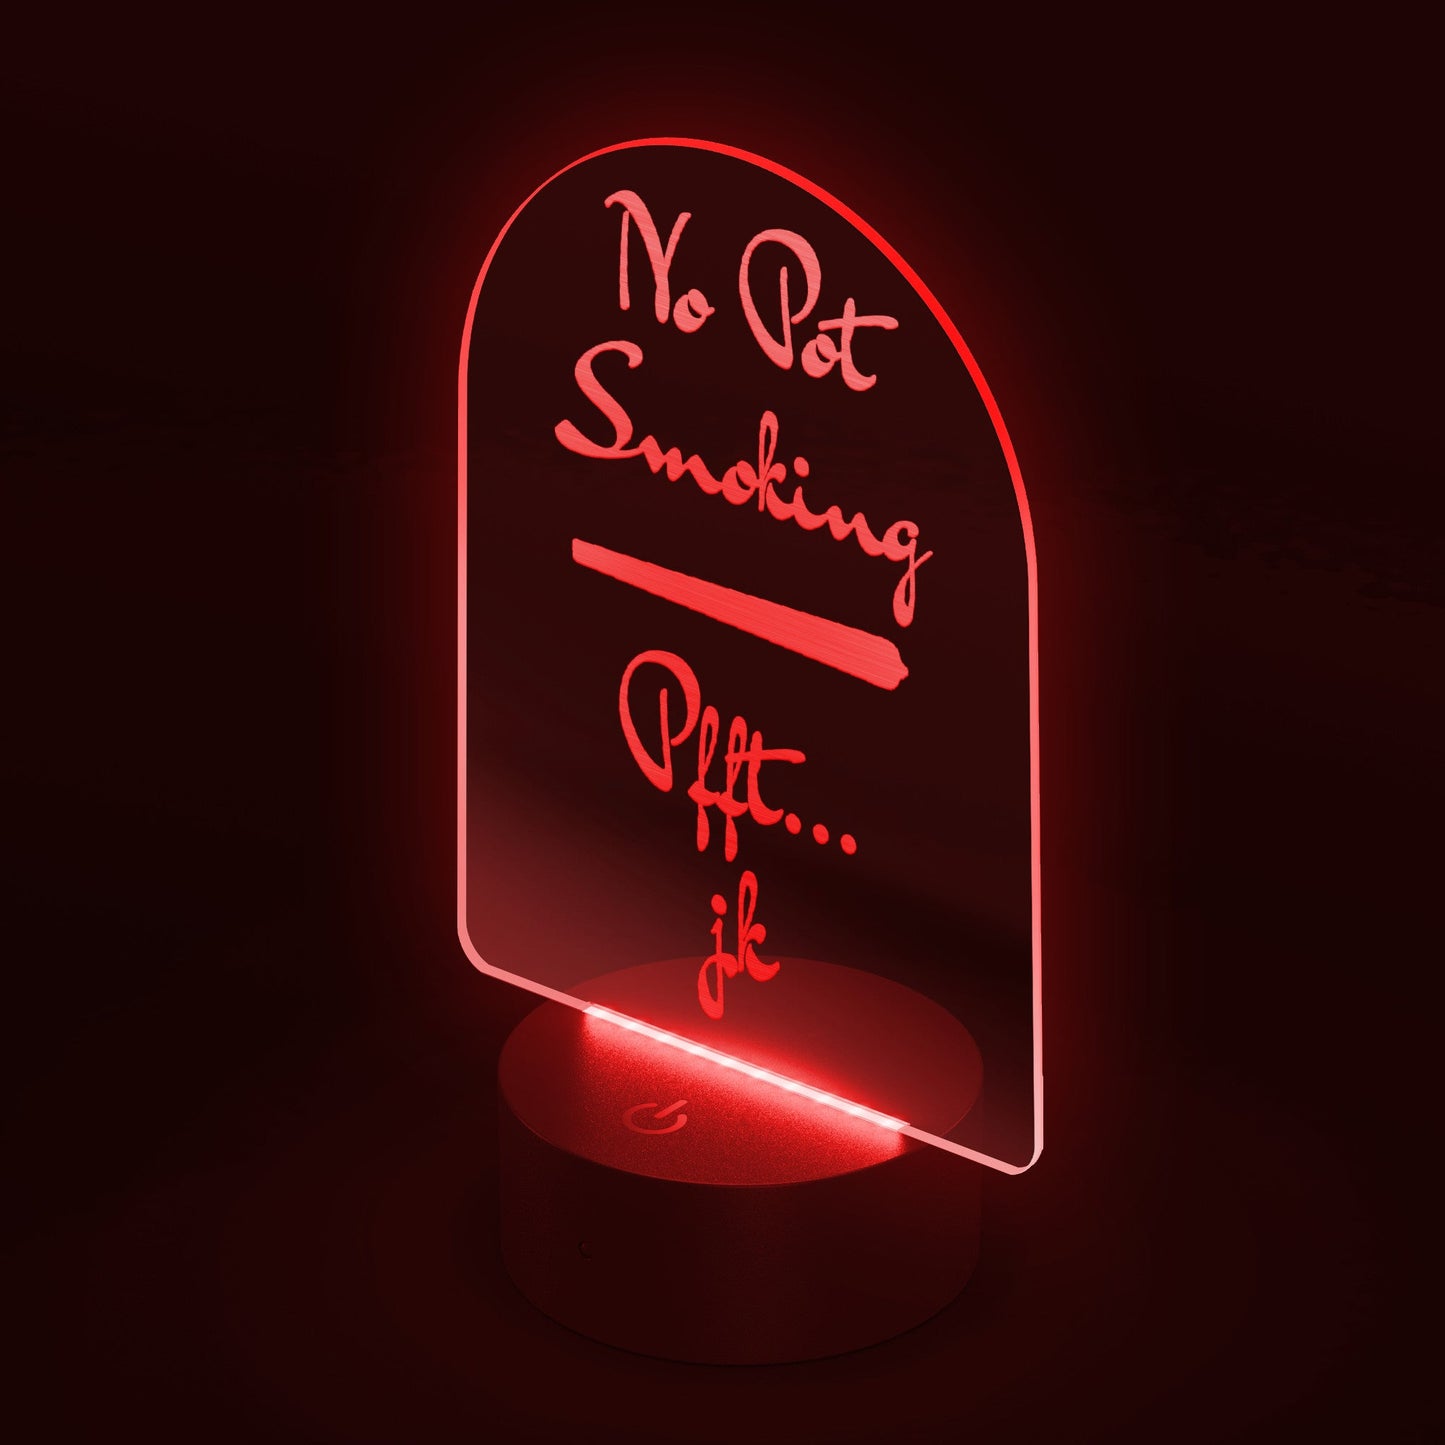 No Pot Smoking Pfft jk Arc Acrylic LED Sign - Lizard Vigilante